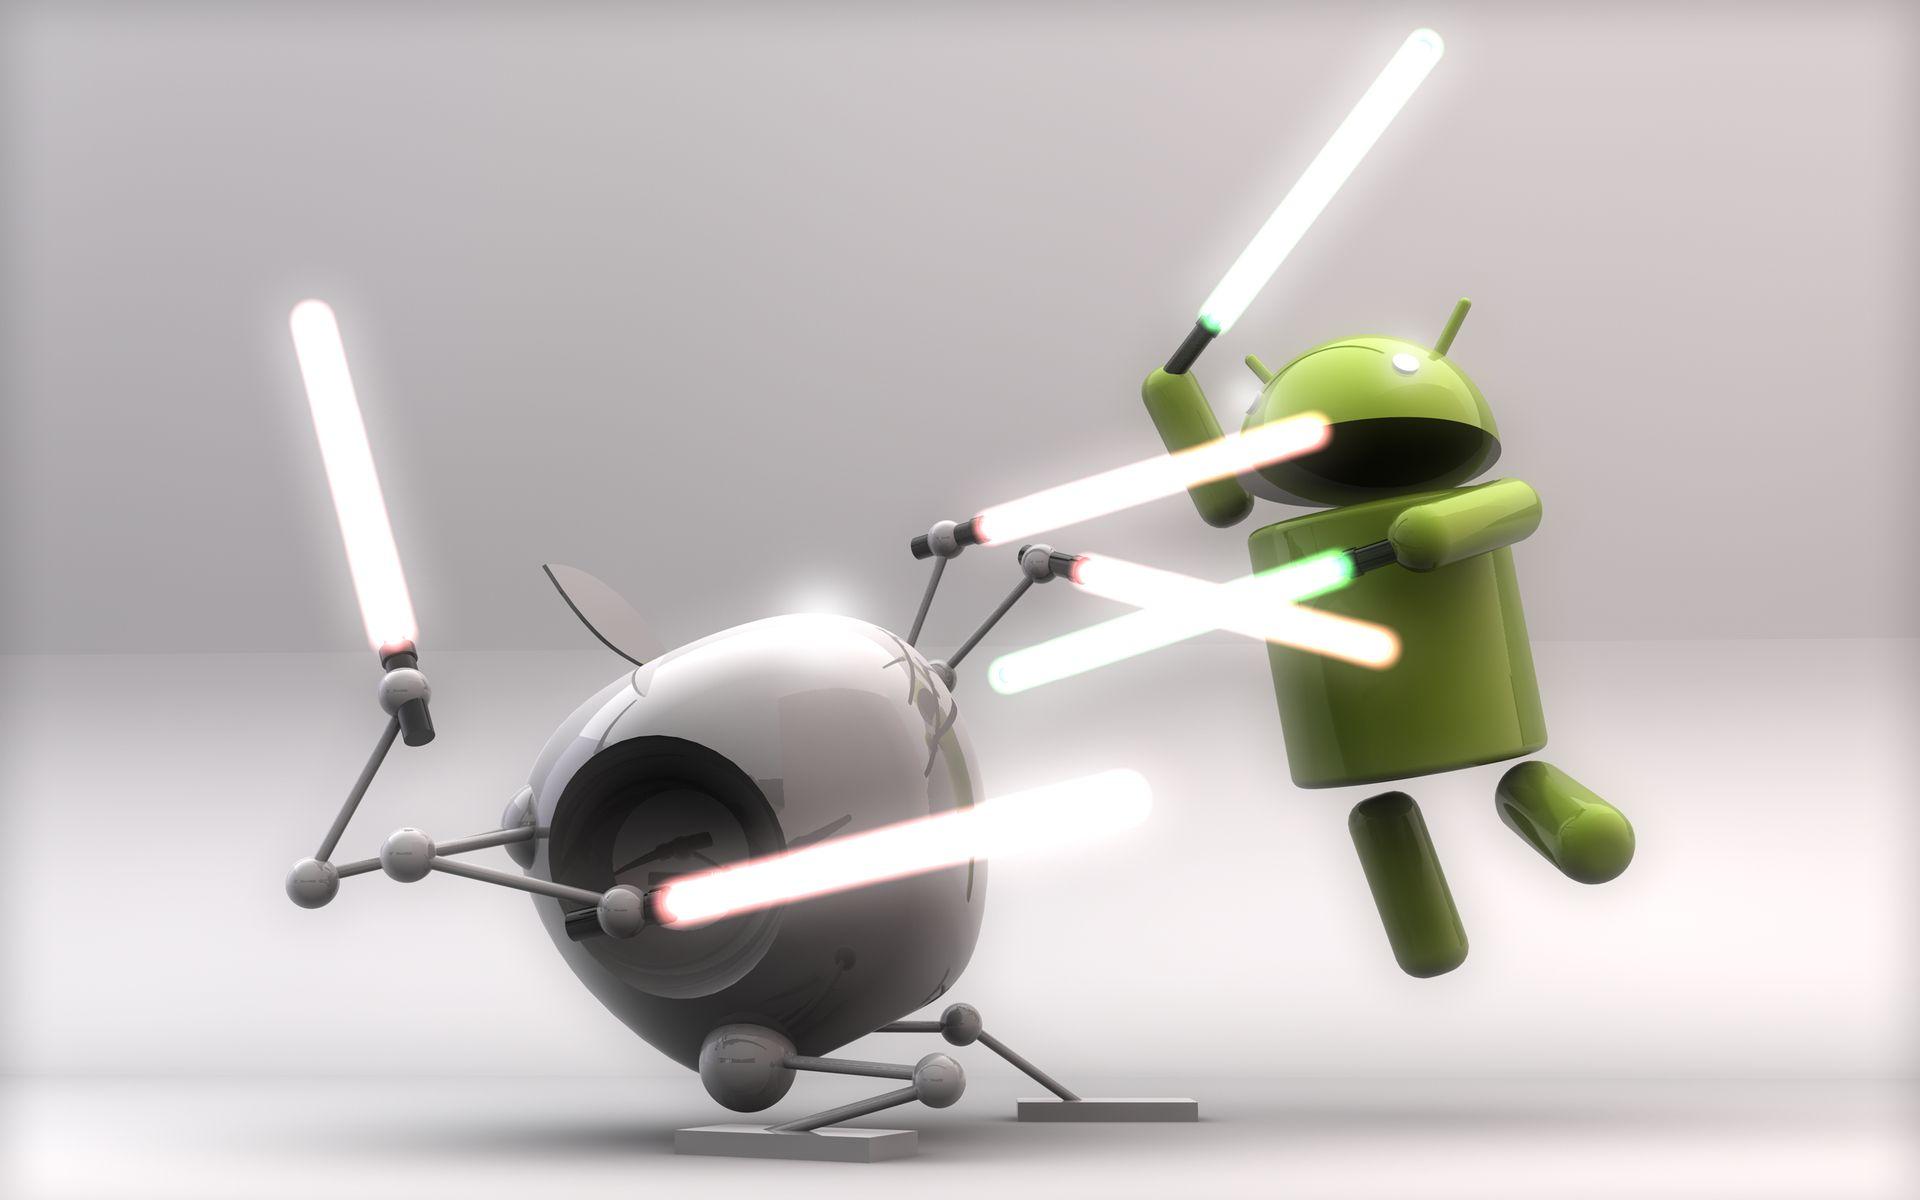 Download the Apple vs Droid Lightsaber Wallpaper, Apple vs Droid